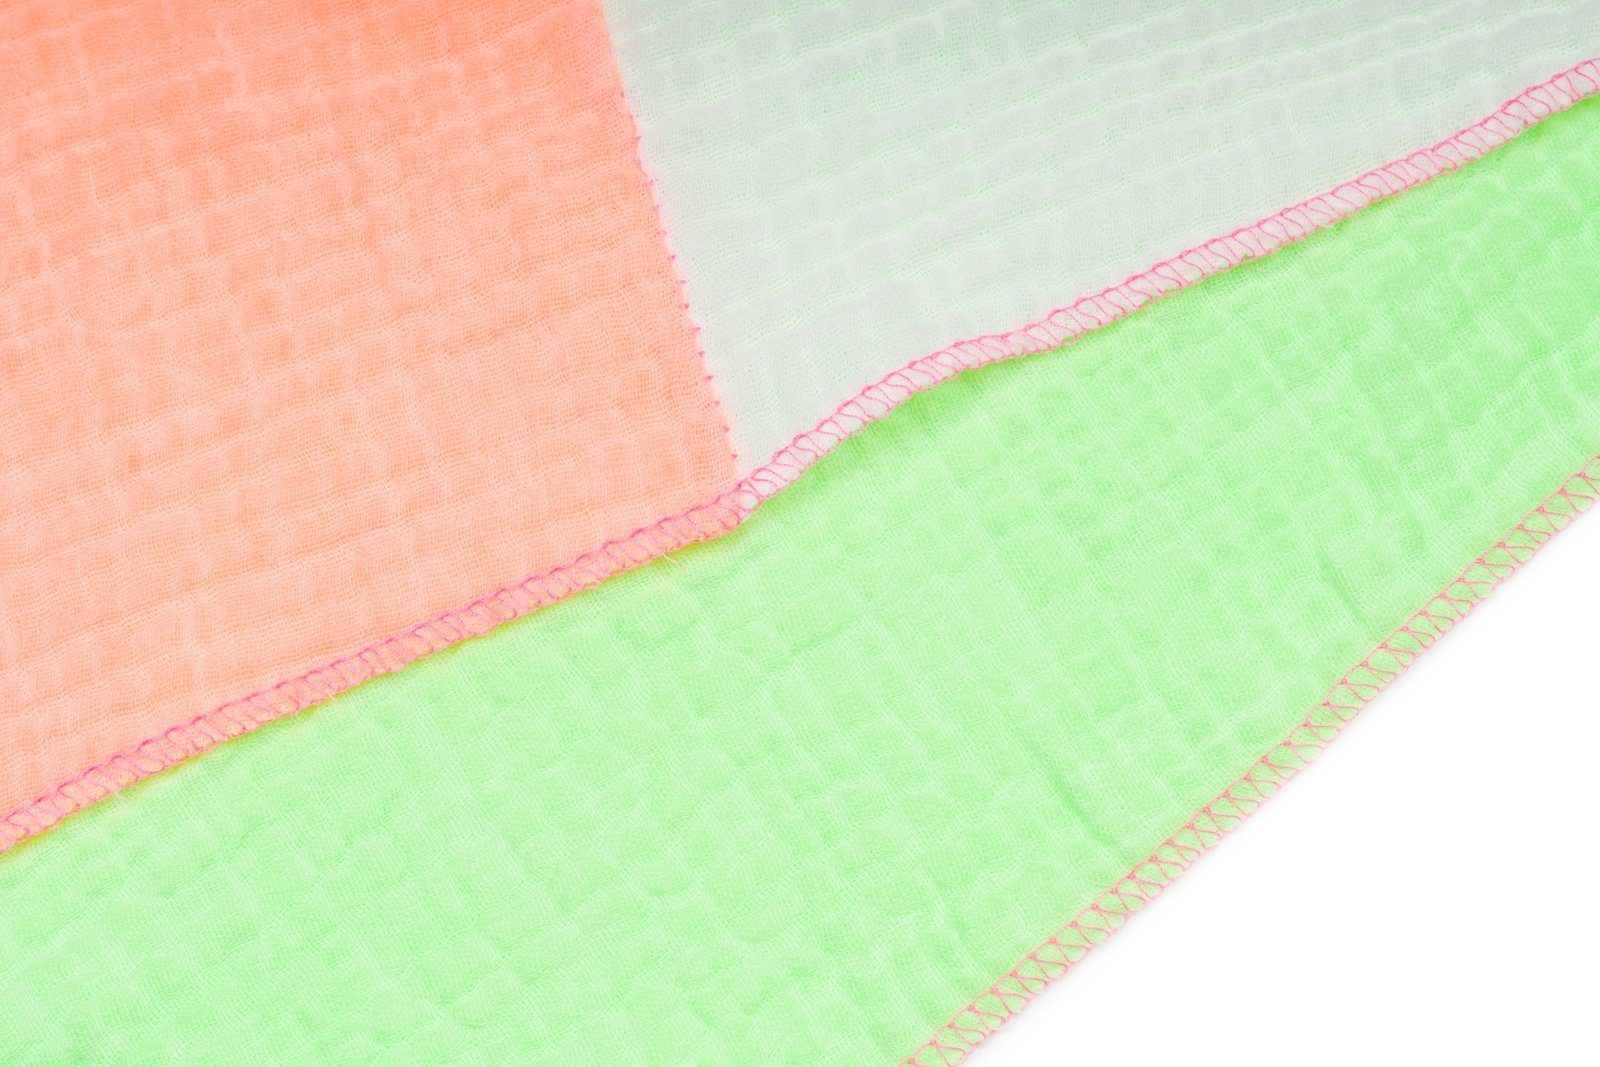 (1-St), Musselin styleBREAKER Dreieckstuch Dreieckstuch, 3-Farbiges Neongrün-Neonorange-Weiß